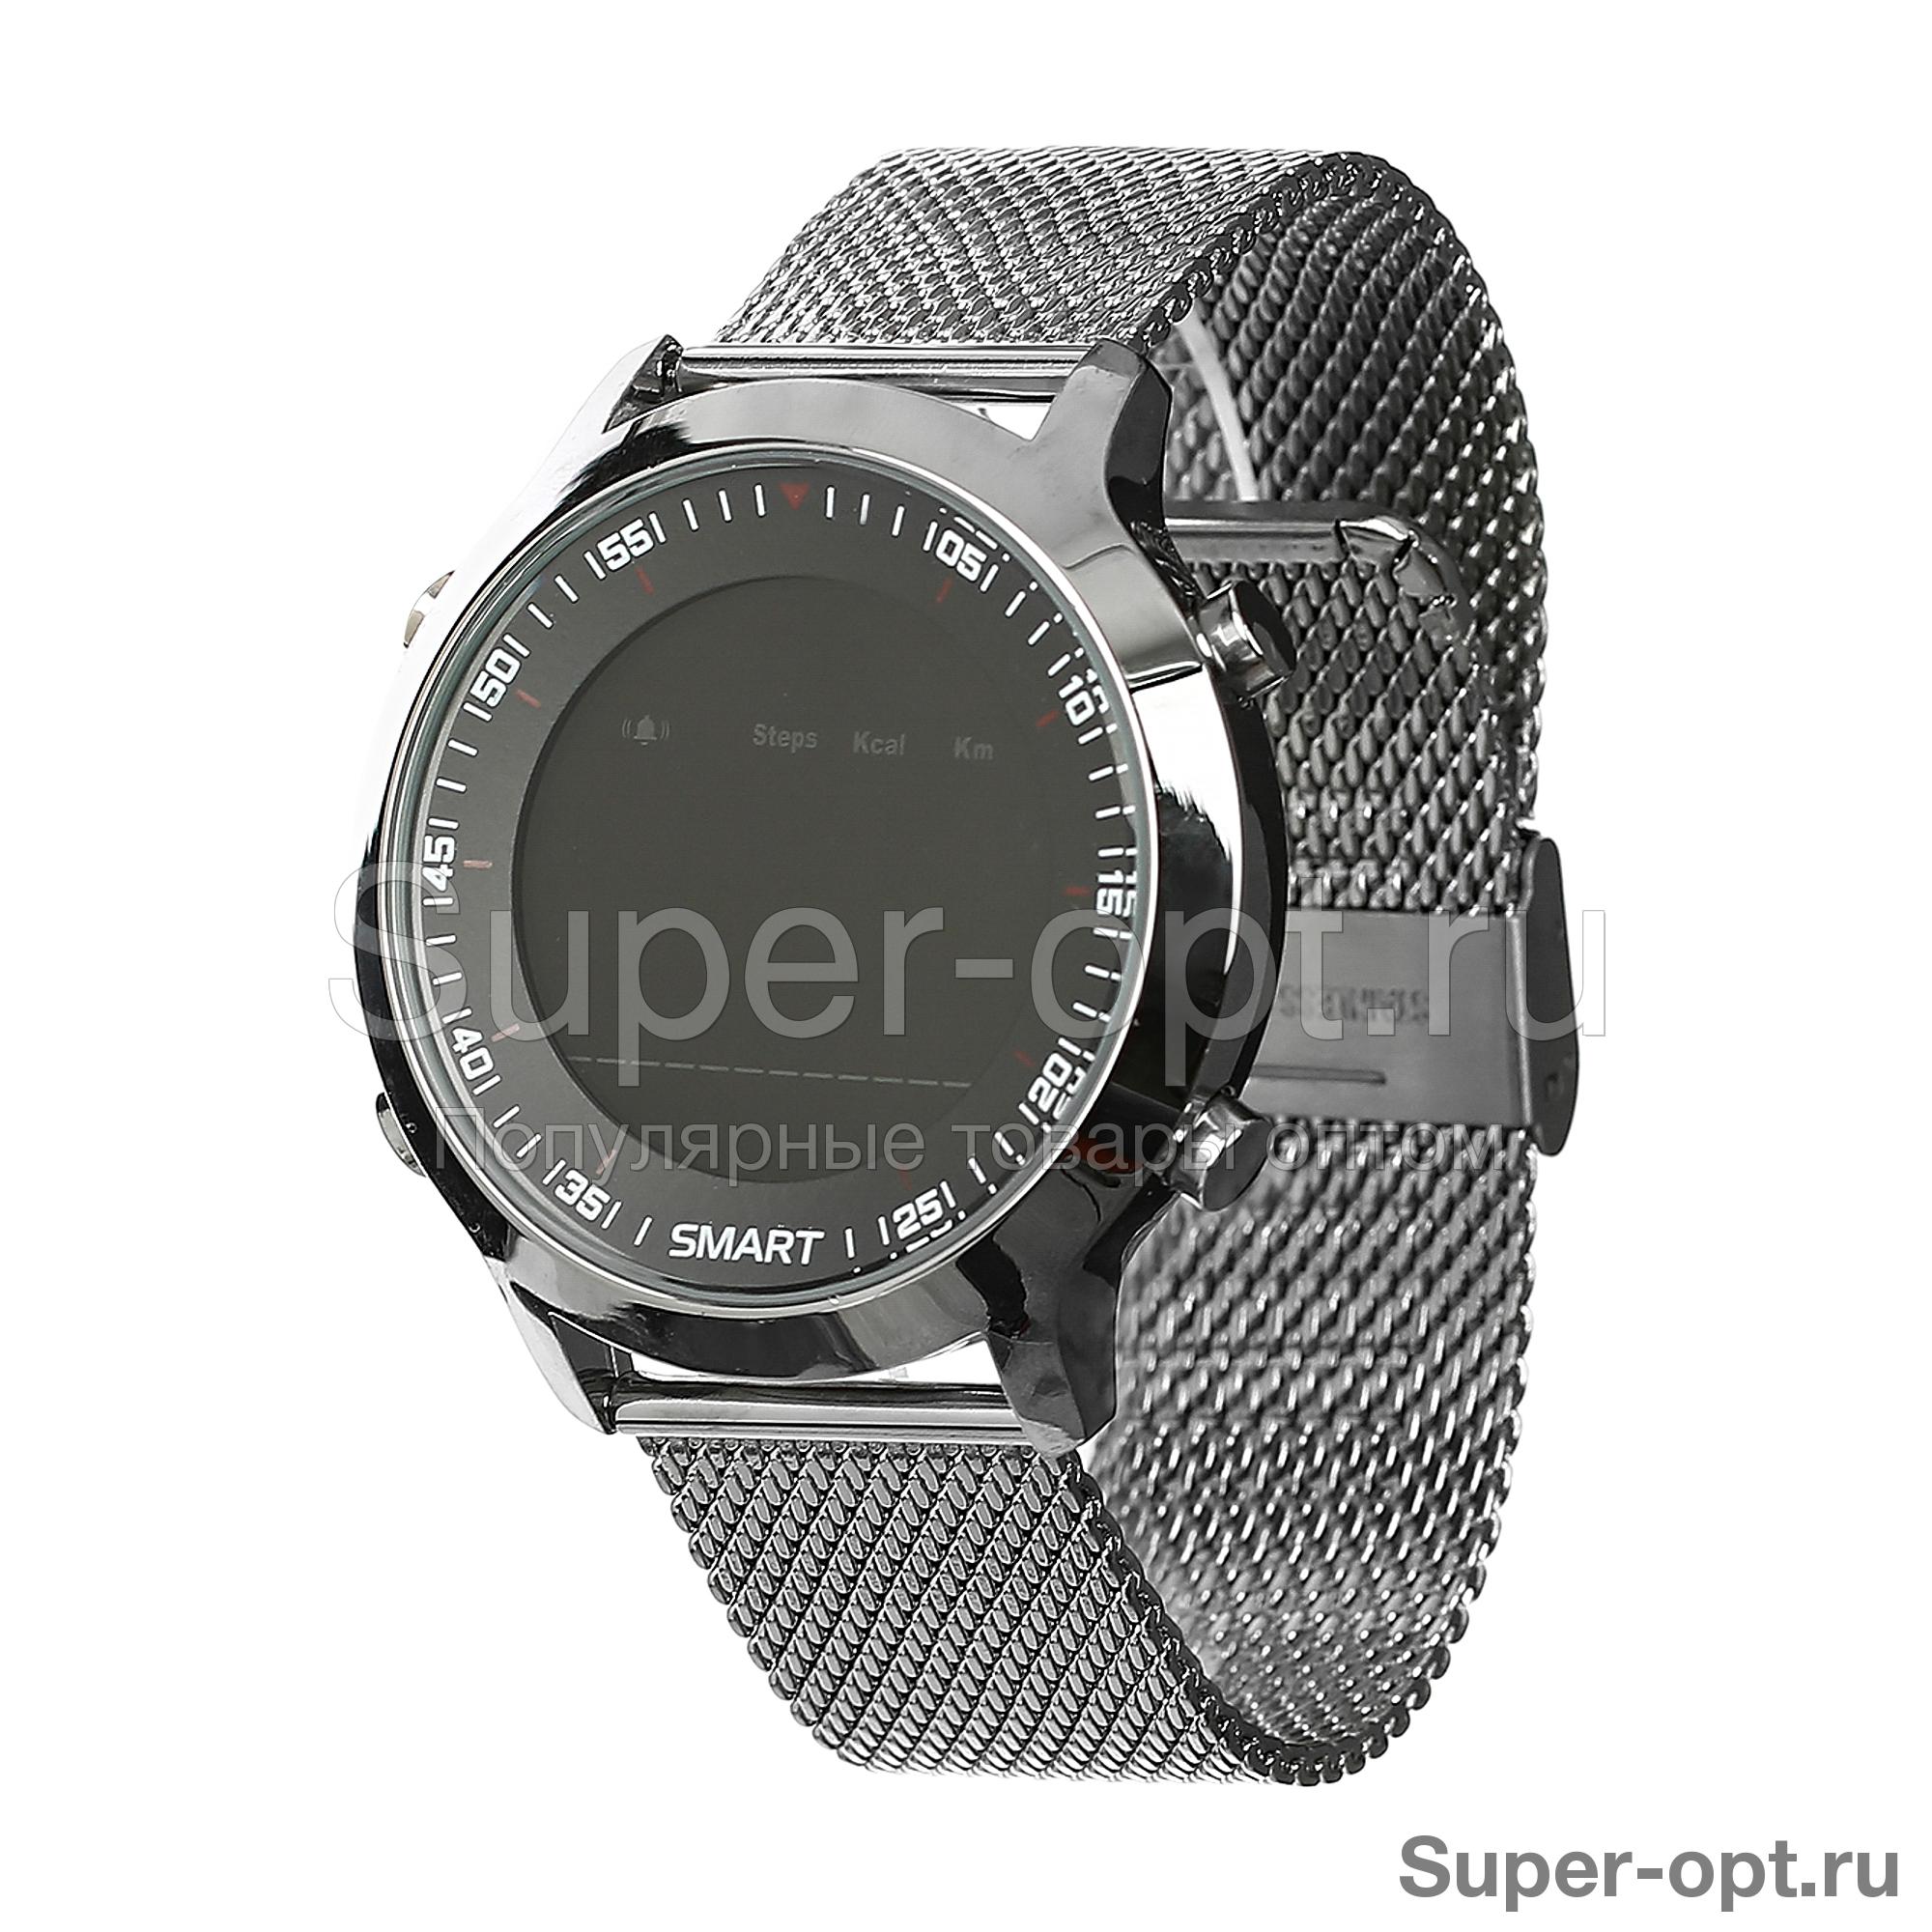 Watch all sports. Smart watch ex18. Часы Sport Smart watch ex18. Часы Smart elband ex 18. Умные часы XWATCH ex18 силикон.